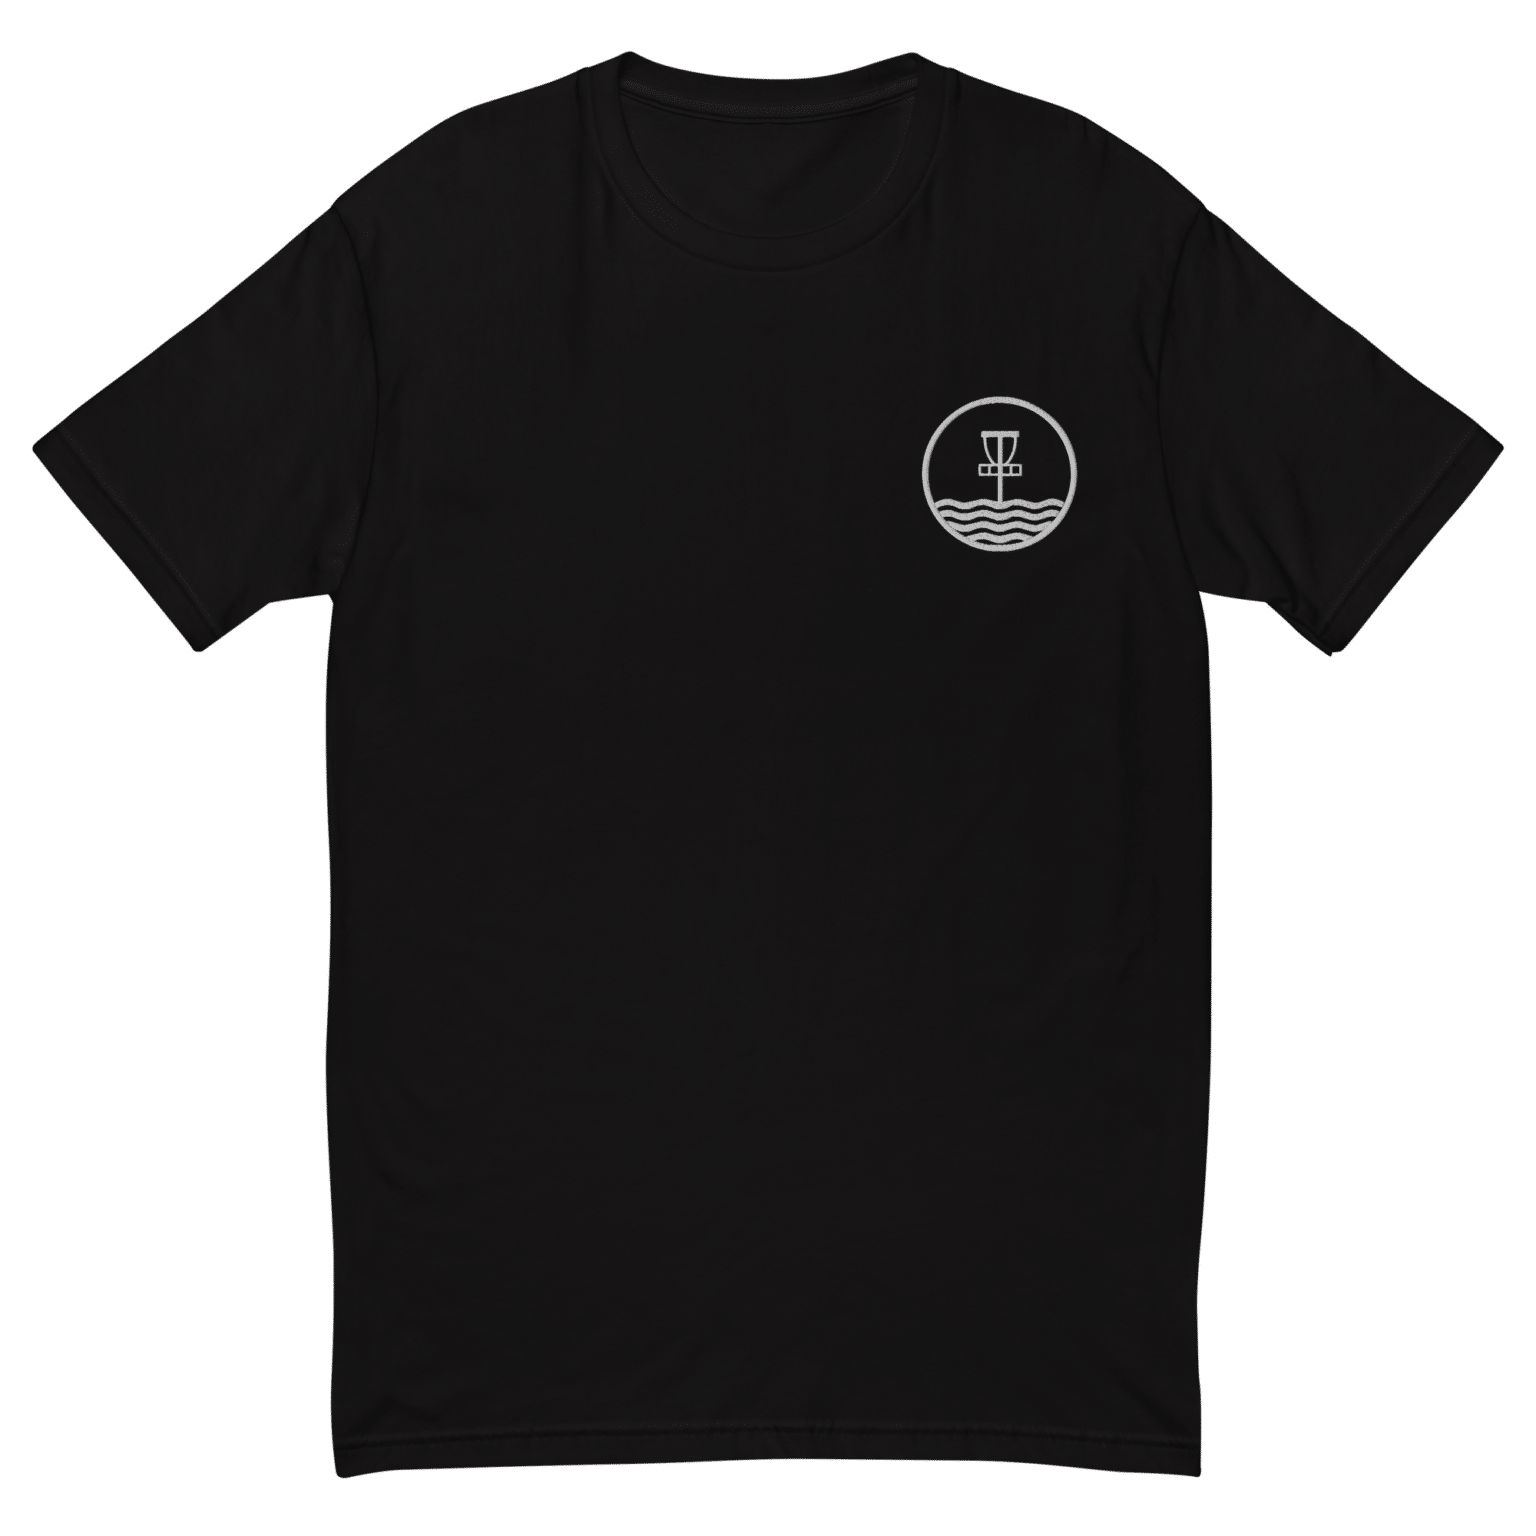 Unisex Short Sleeve Fitted T-shirt - Marilyn Bell Park Disc Golf